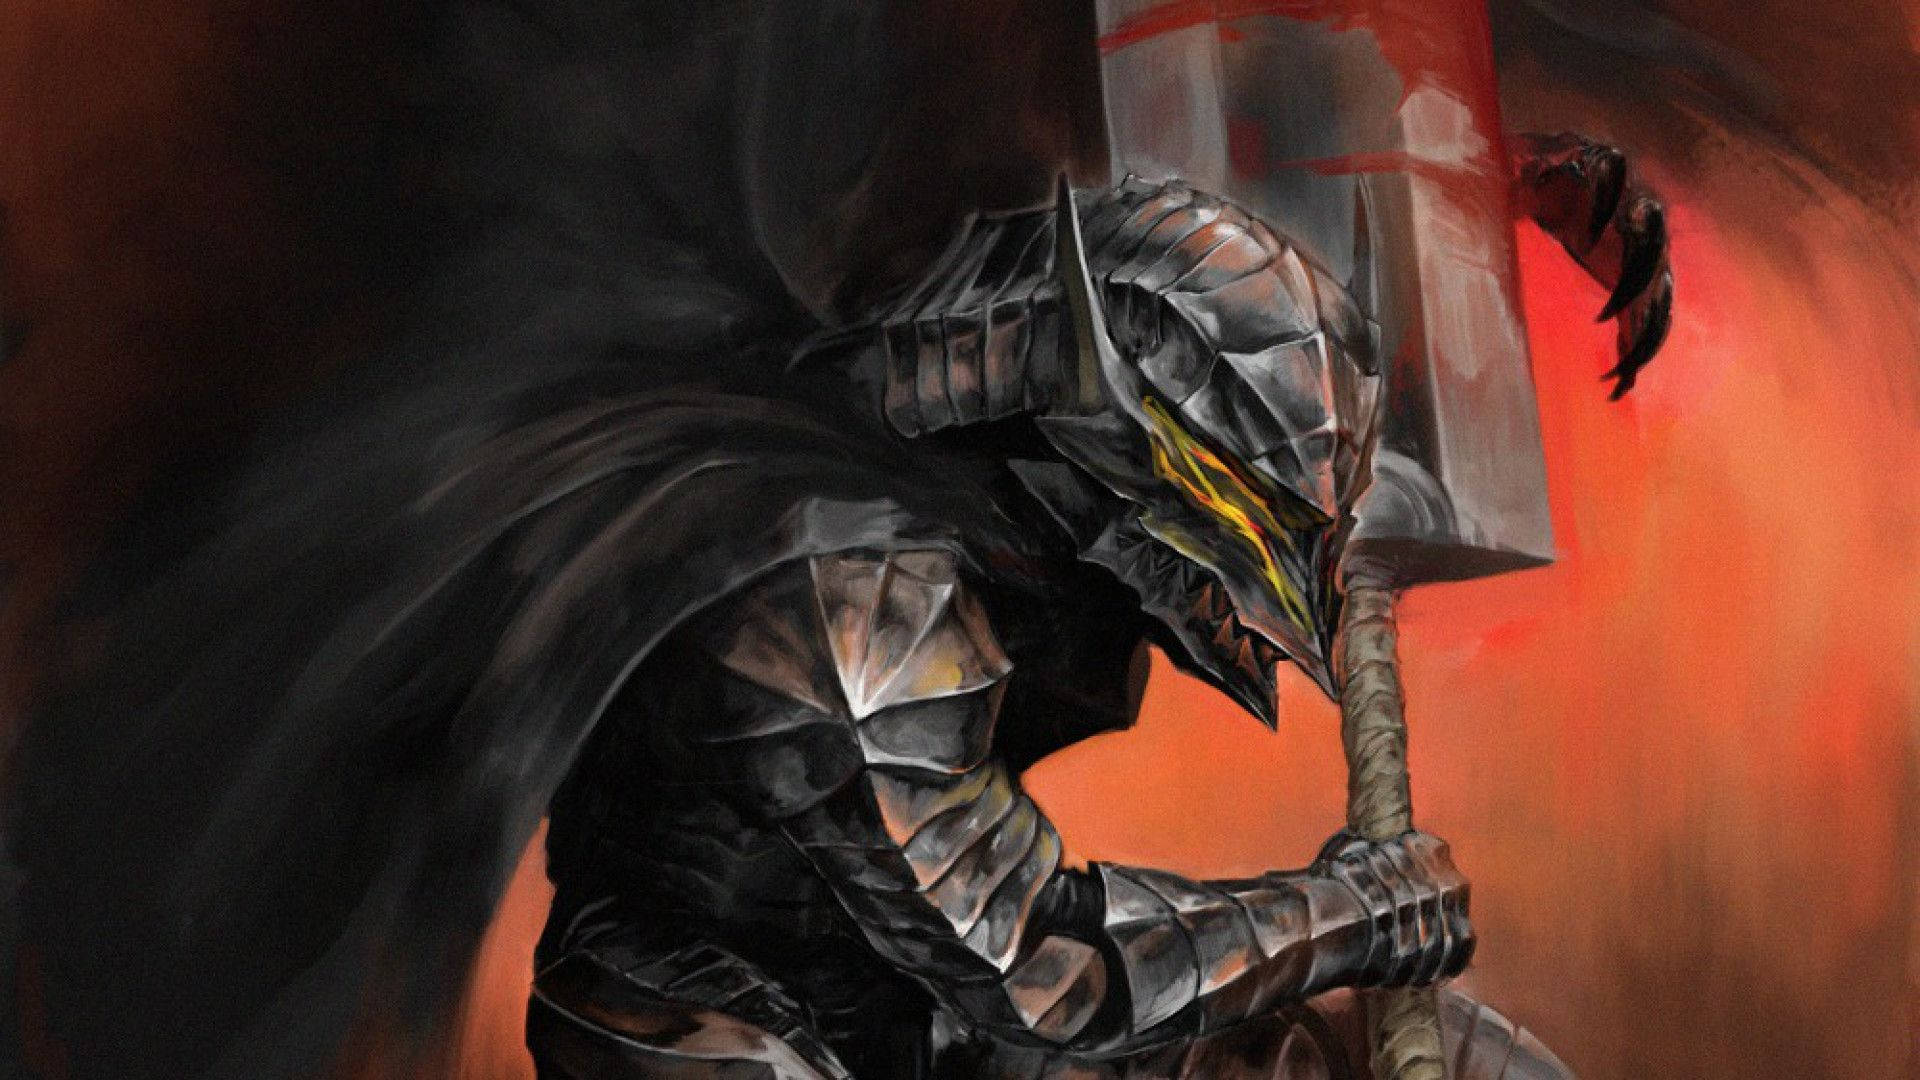 "Preparing for battle in The Berserker Armor from Berserk" Wallpaper